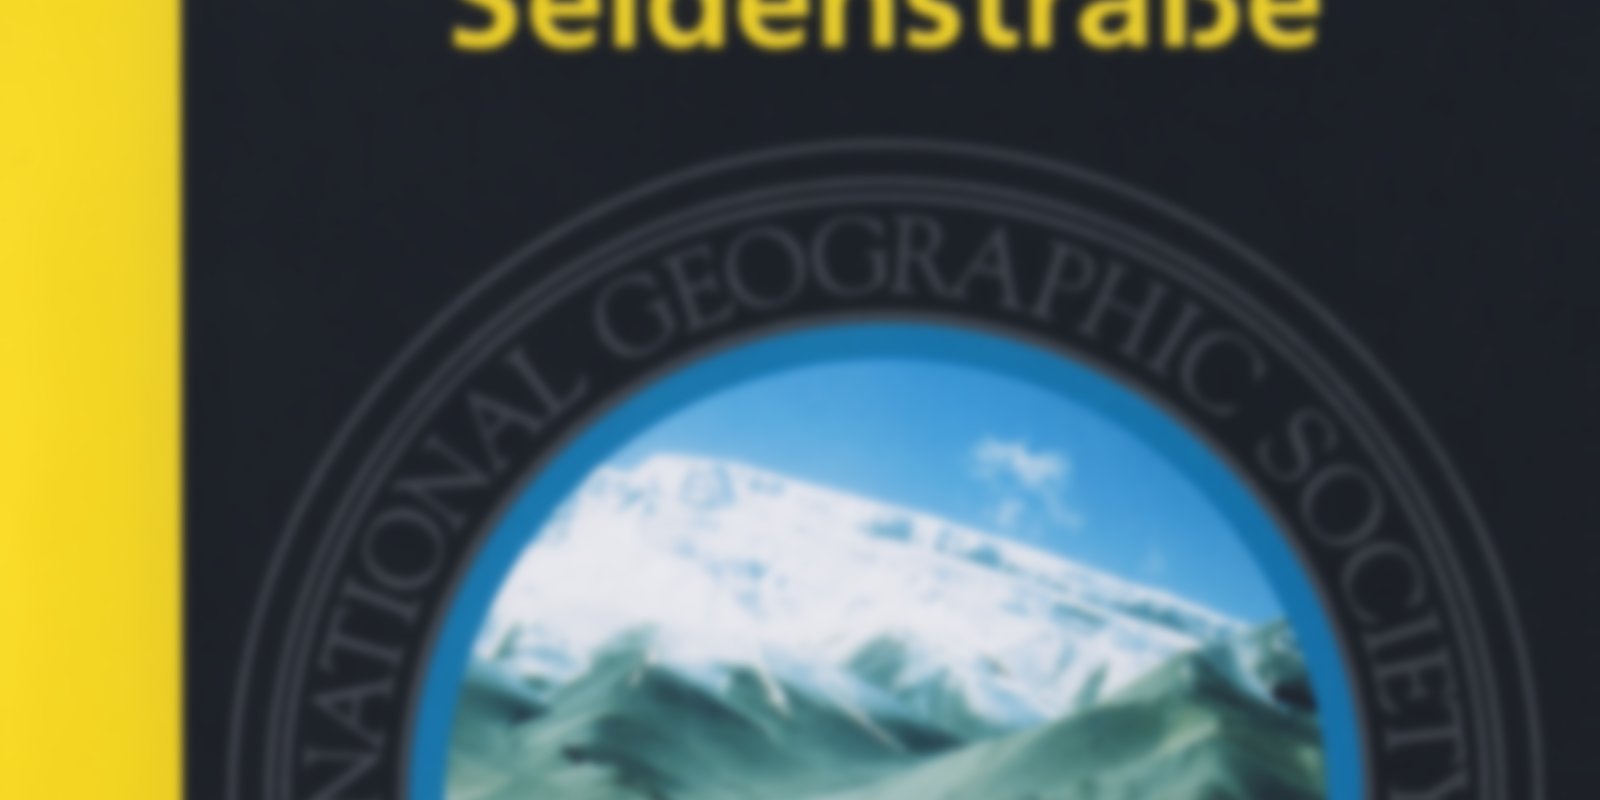 National Geographic - Mythos Seidenstraße